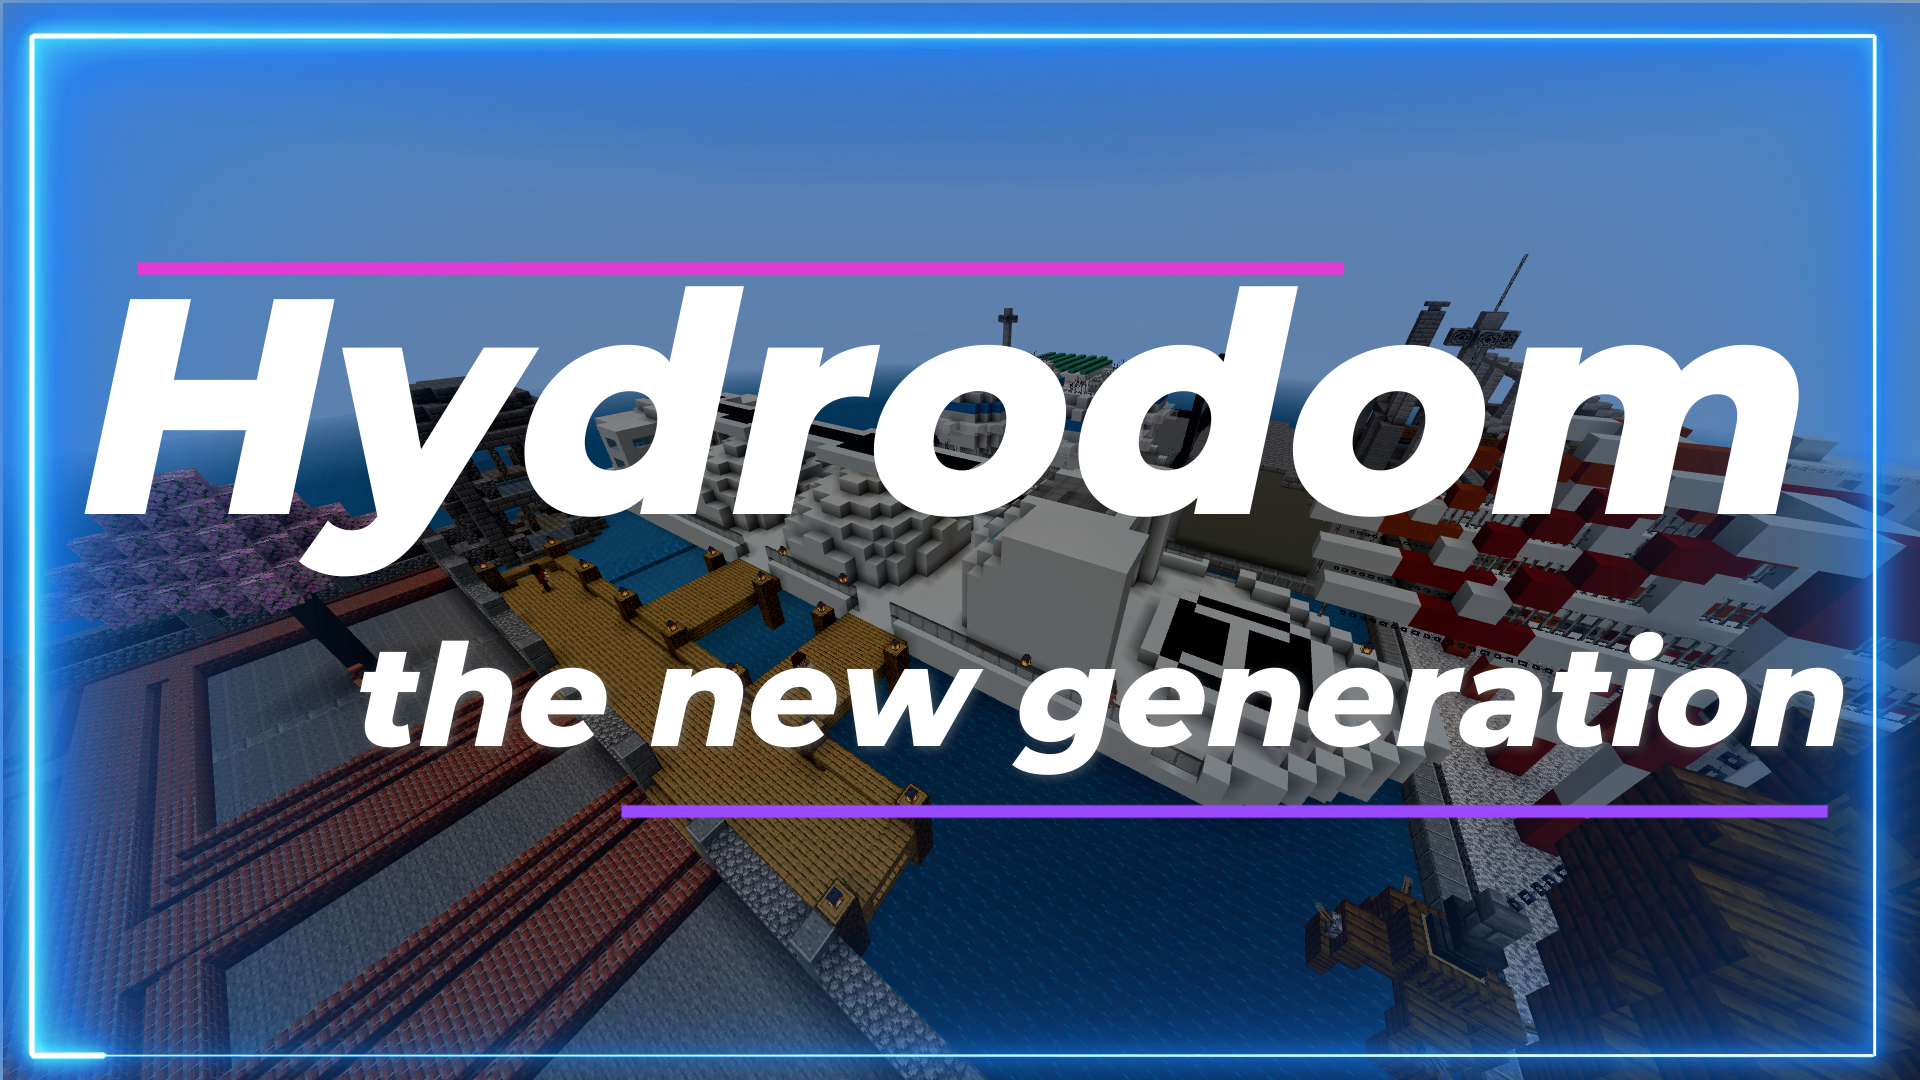 Hydrodom the new generation